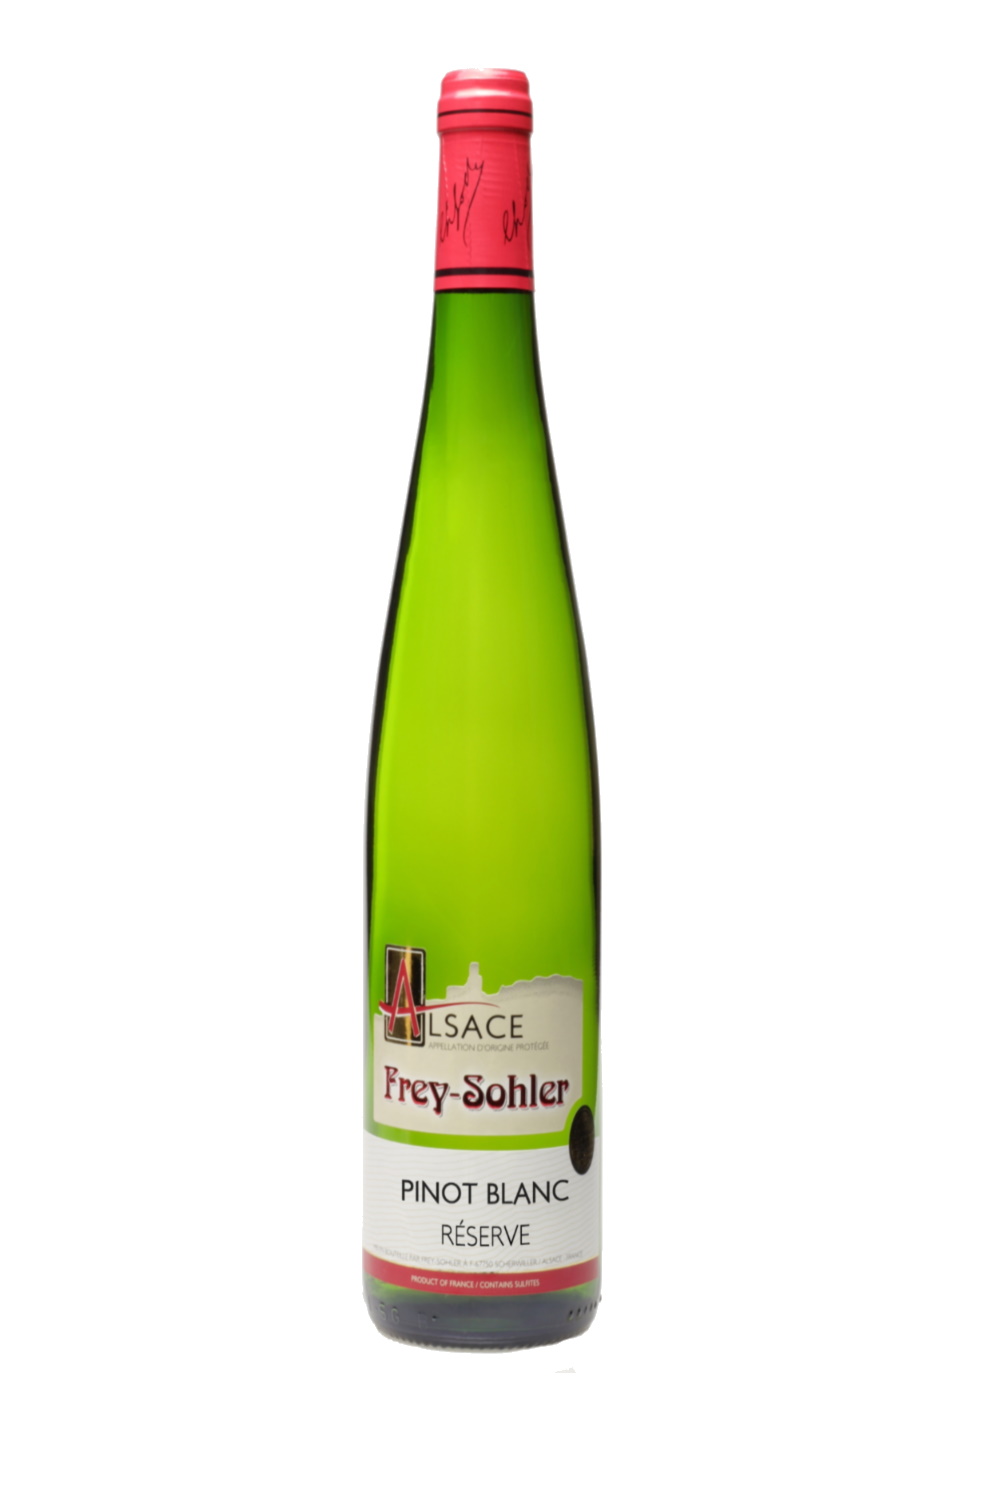 Pinot blanc FRey-Sohler-Lalsace-en-bouteille